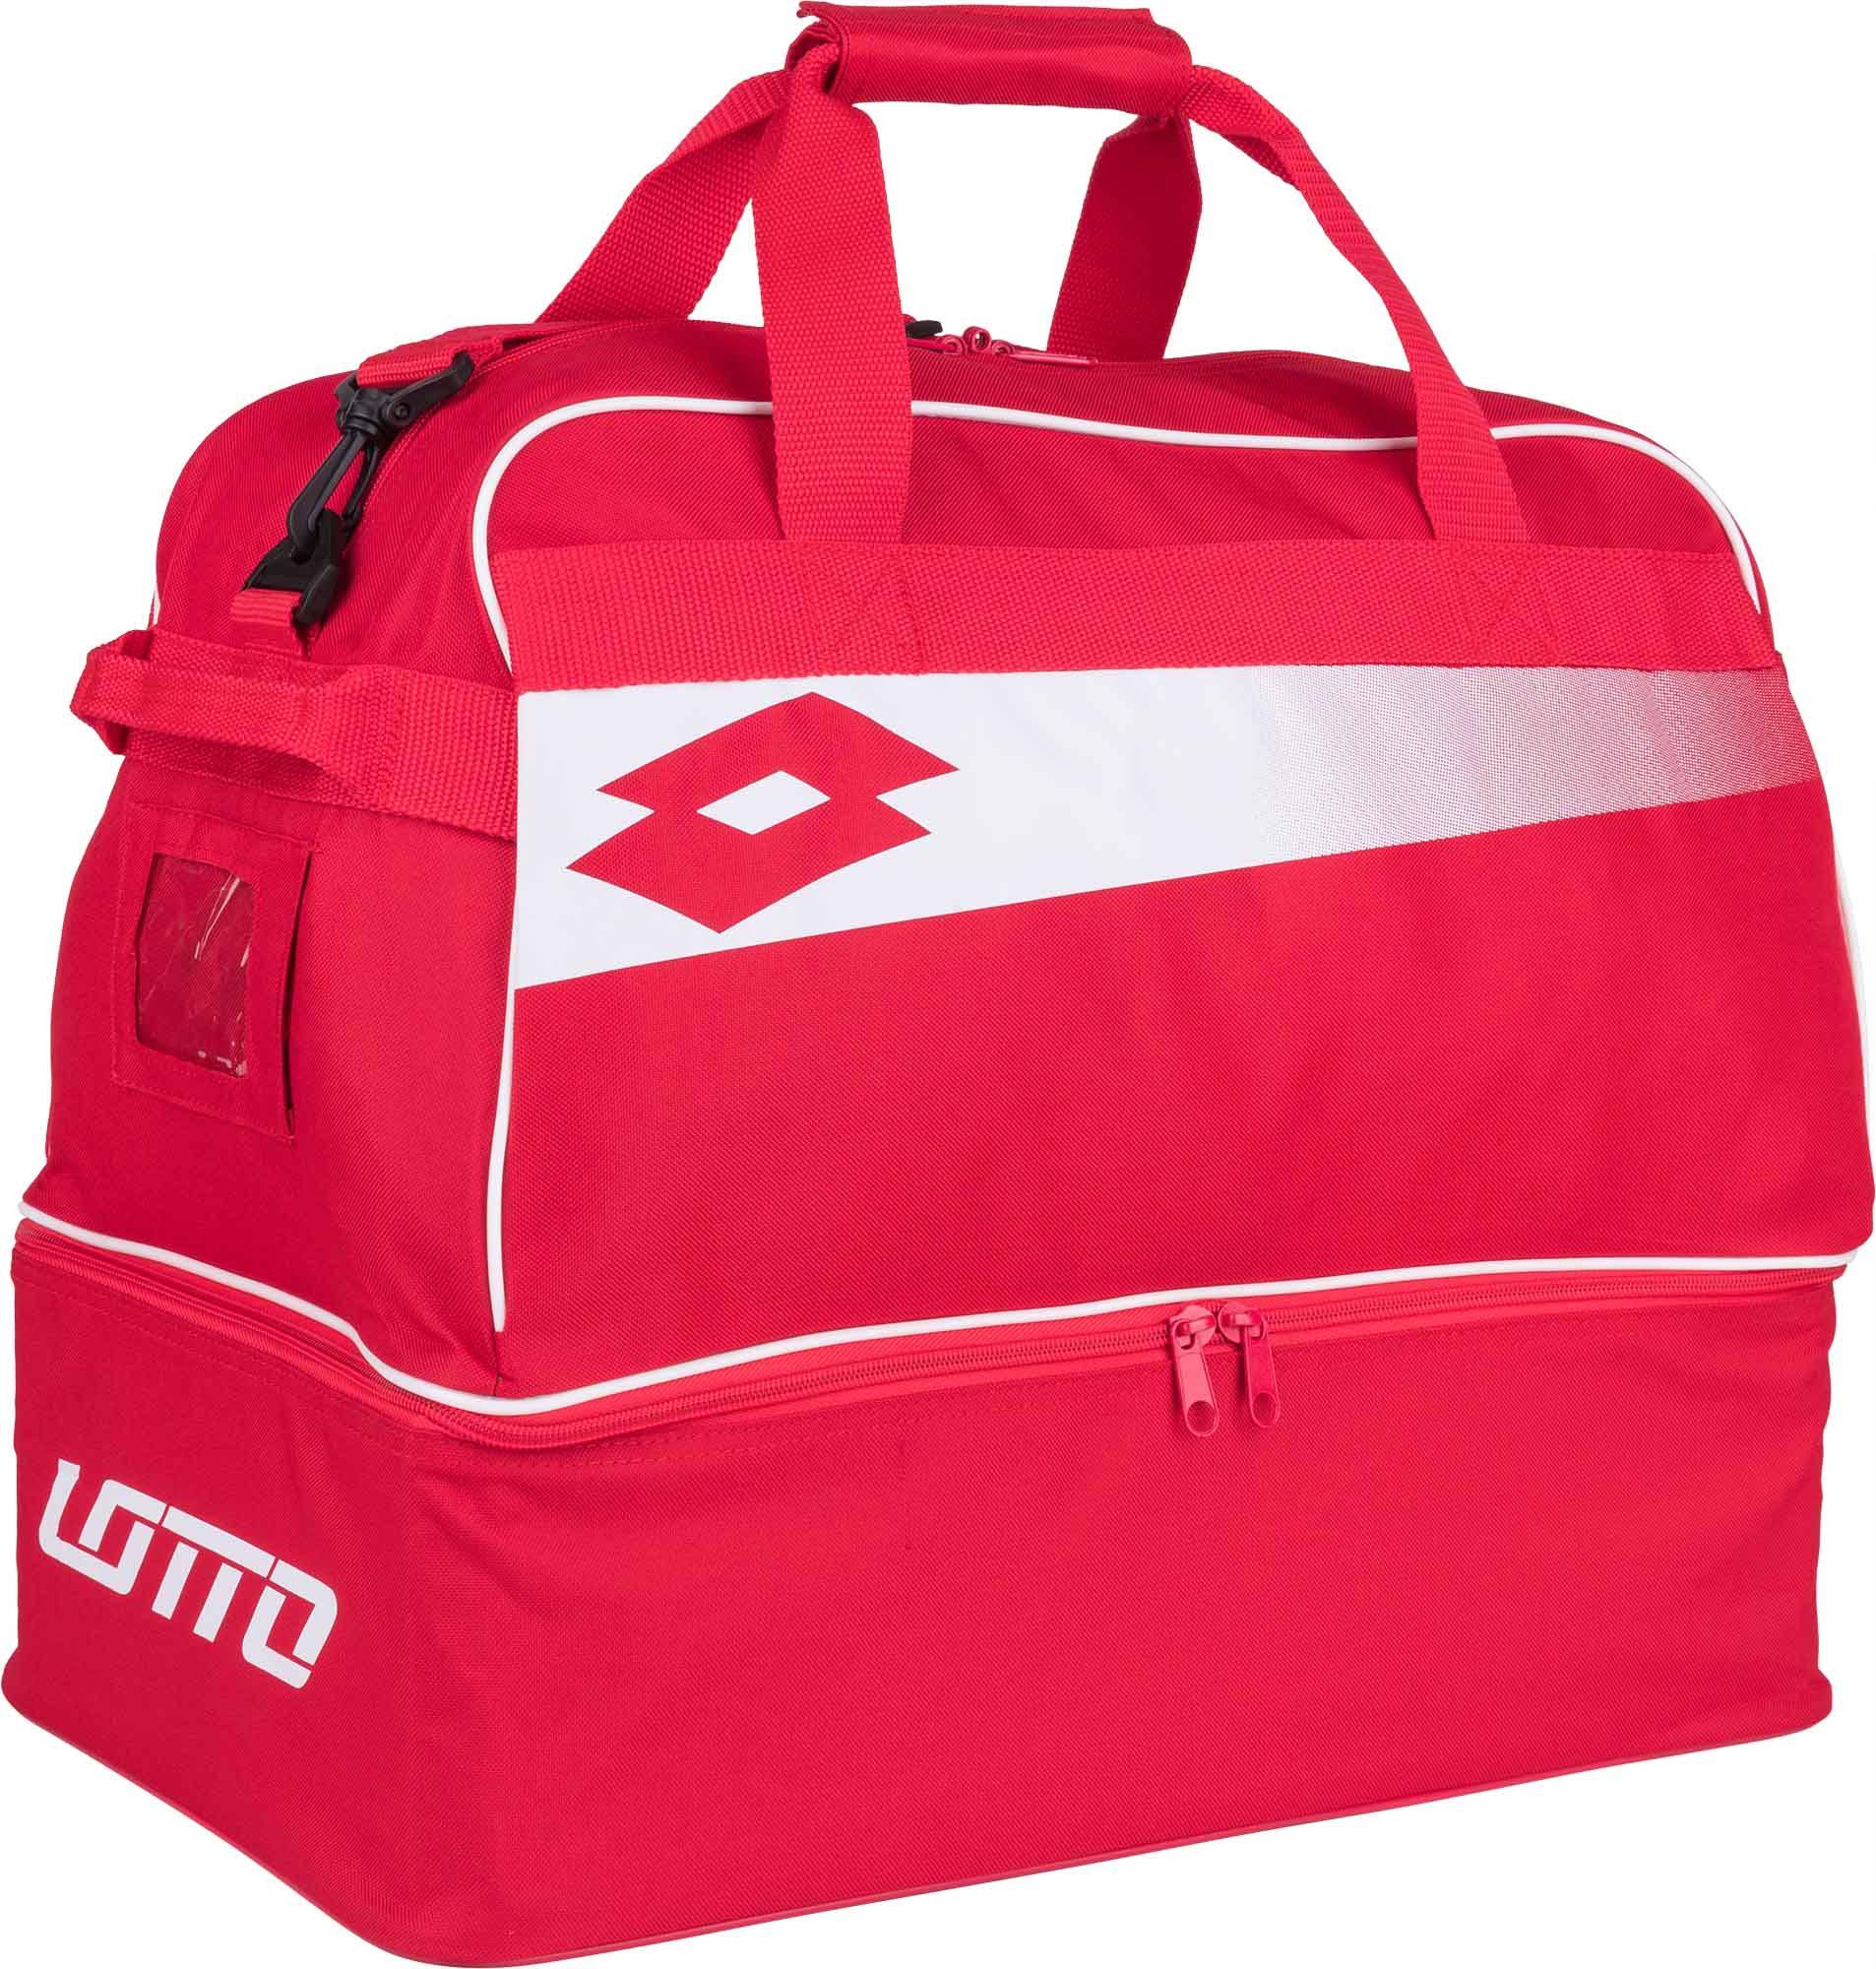 Lotto Sport Italia Backpack L Bag 32 x 42 cm 213276- 8412688213276 | eBay